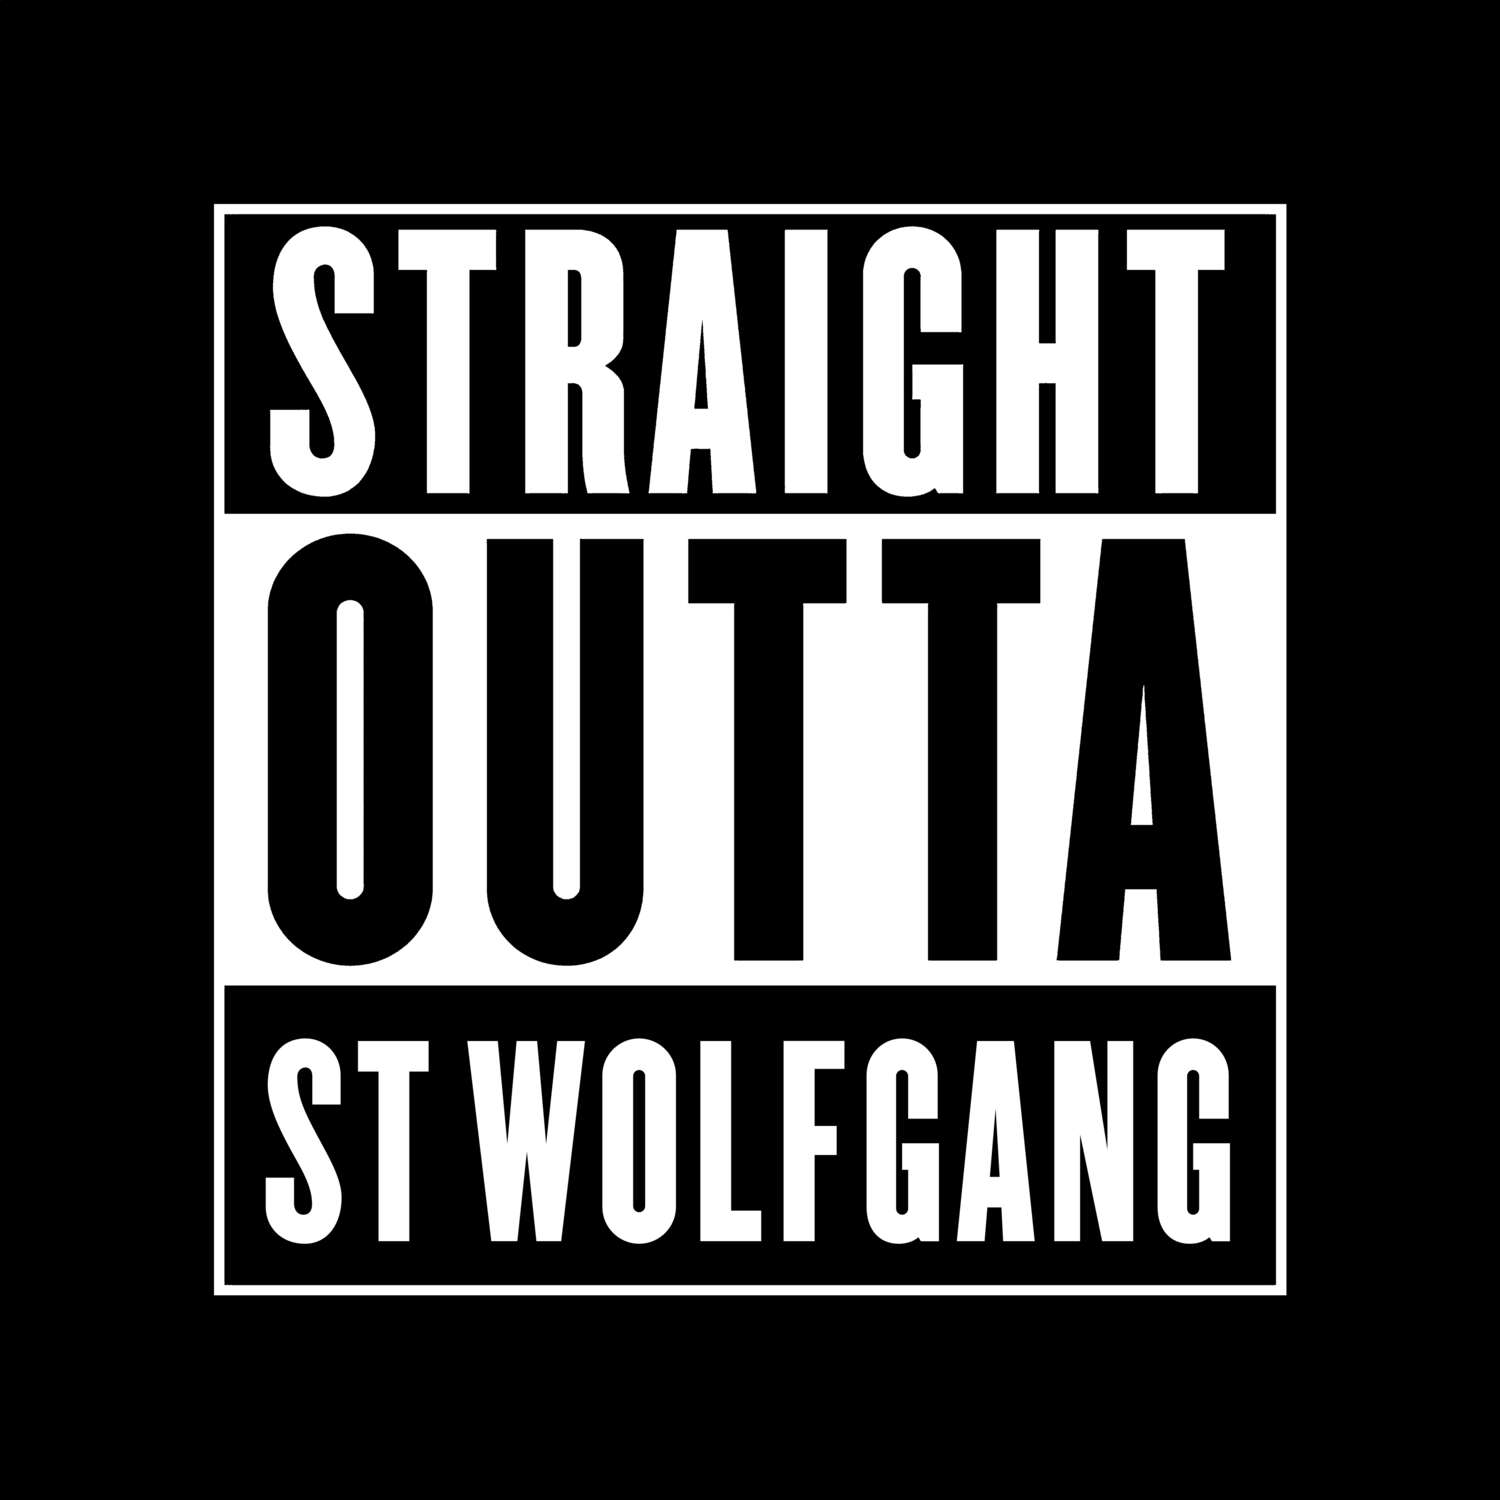 St Wolfgang T-Shirt »Straight Outta«